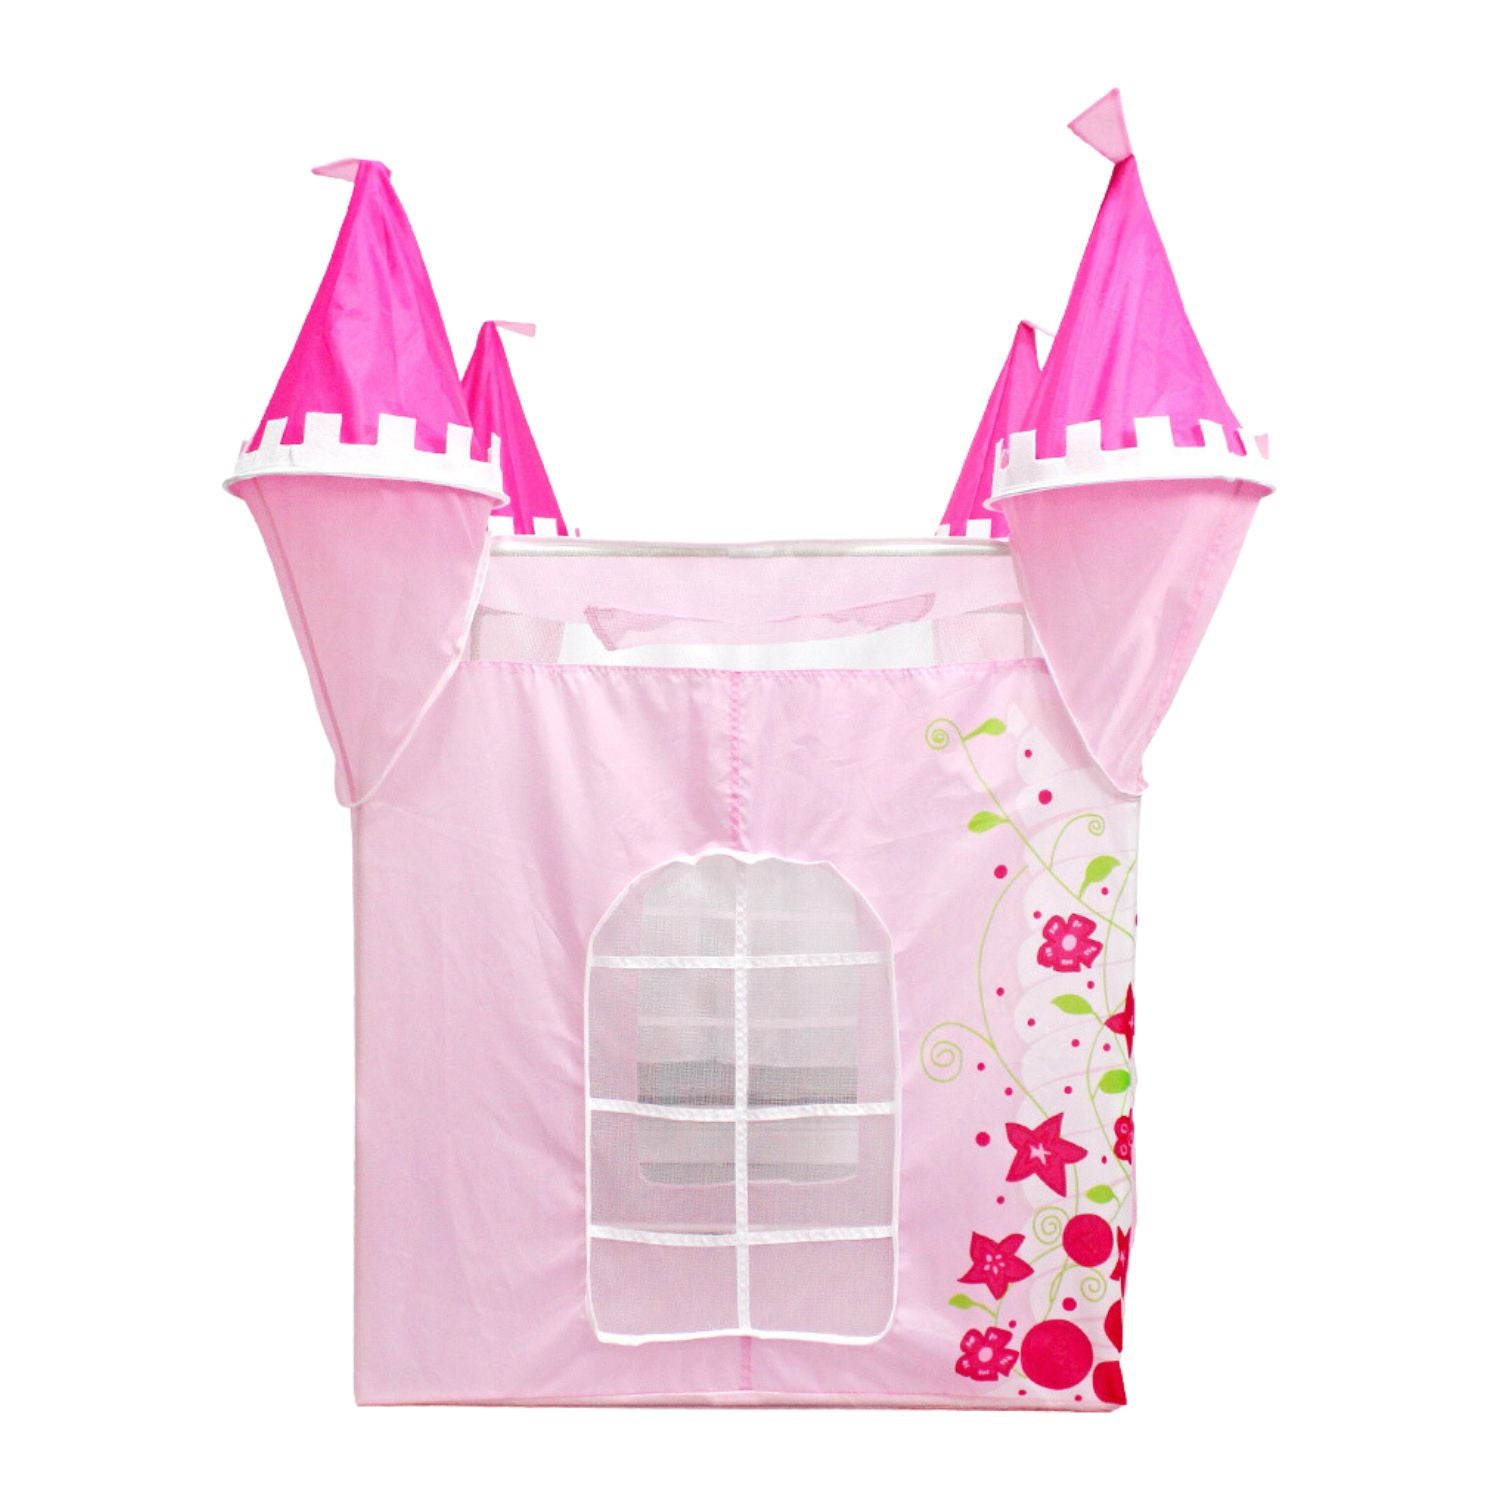 GOMINIMO Kids Princess Castle Tent (Pink) GO-KT-111-LK - SILBERSHELL